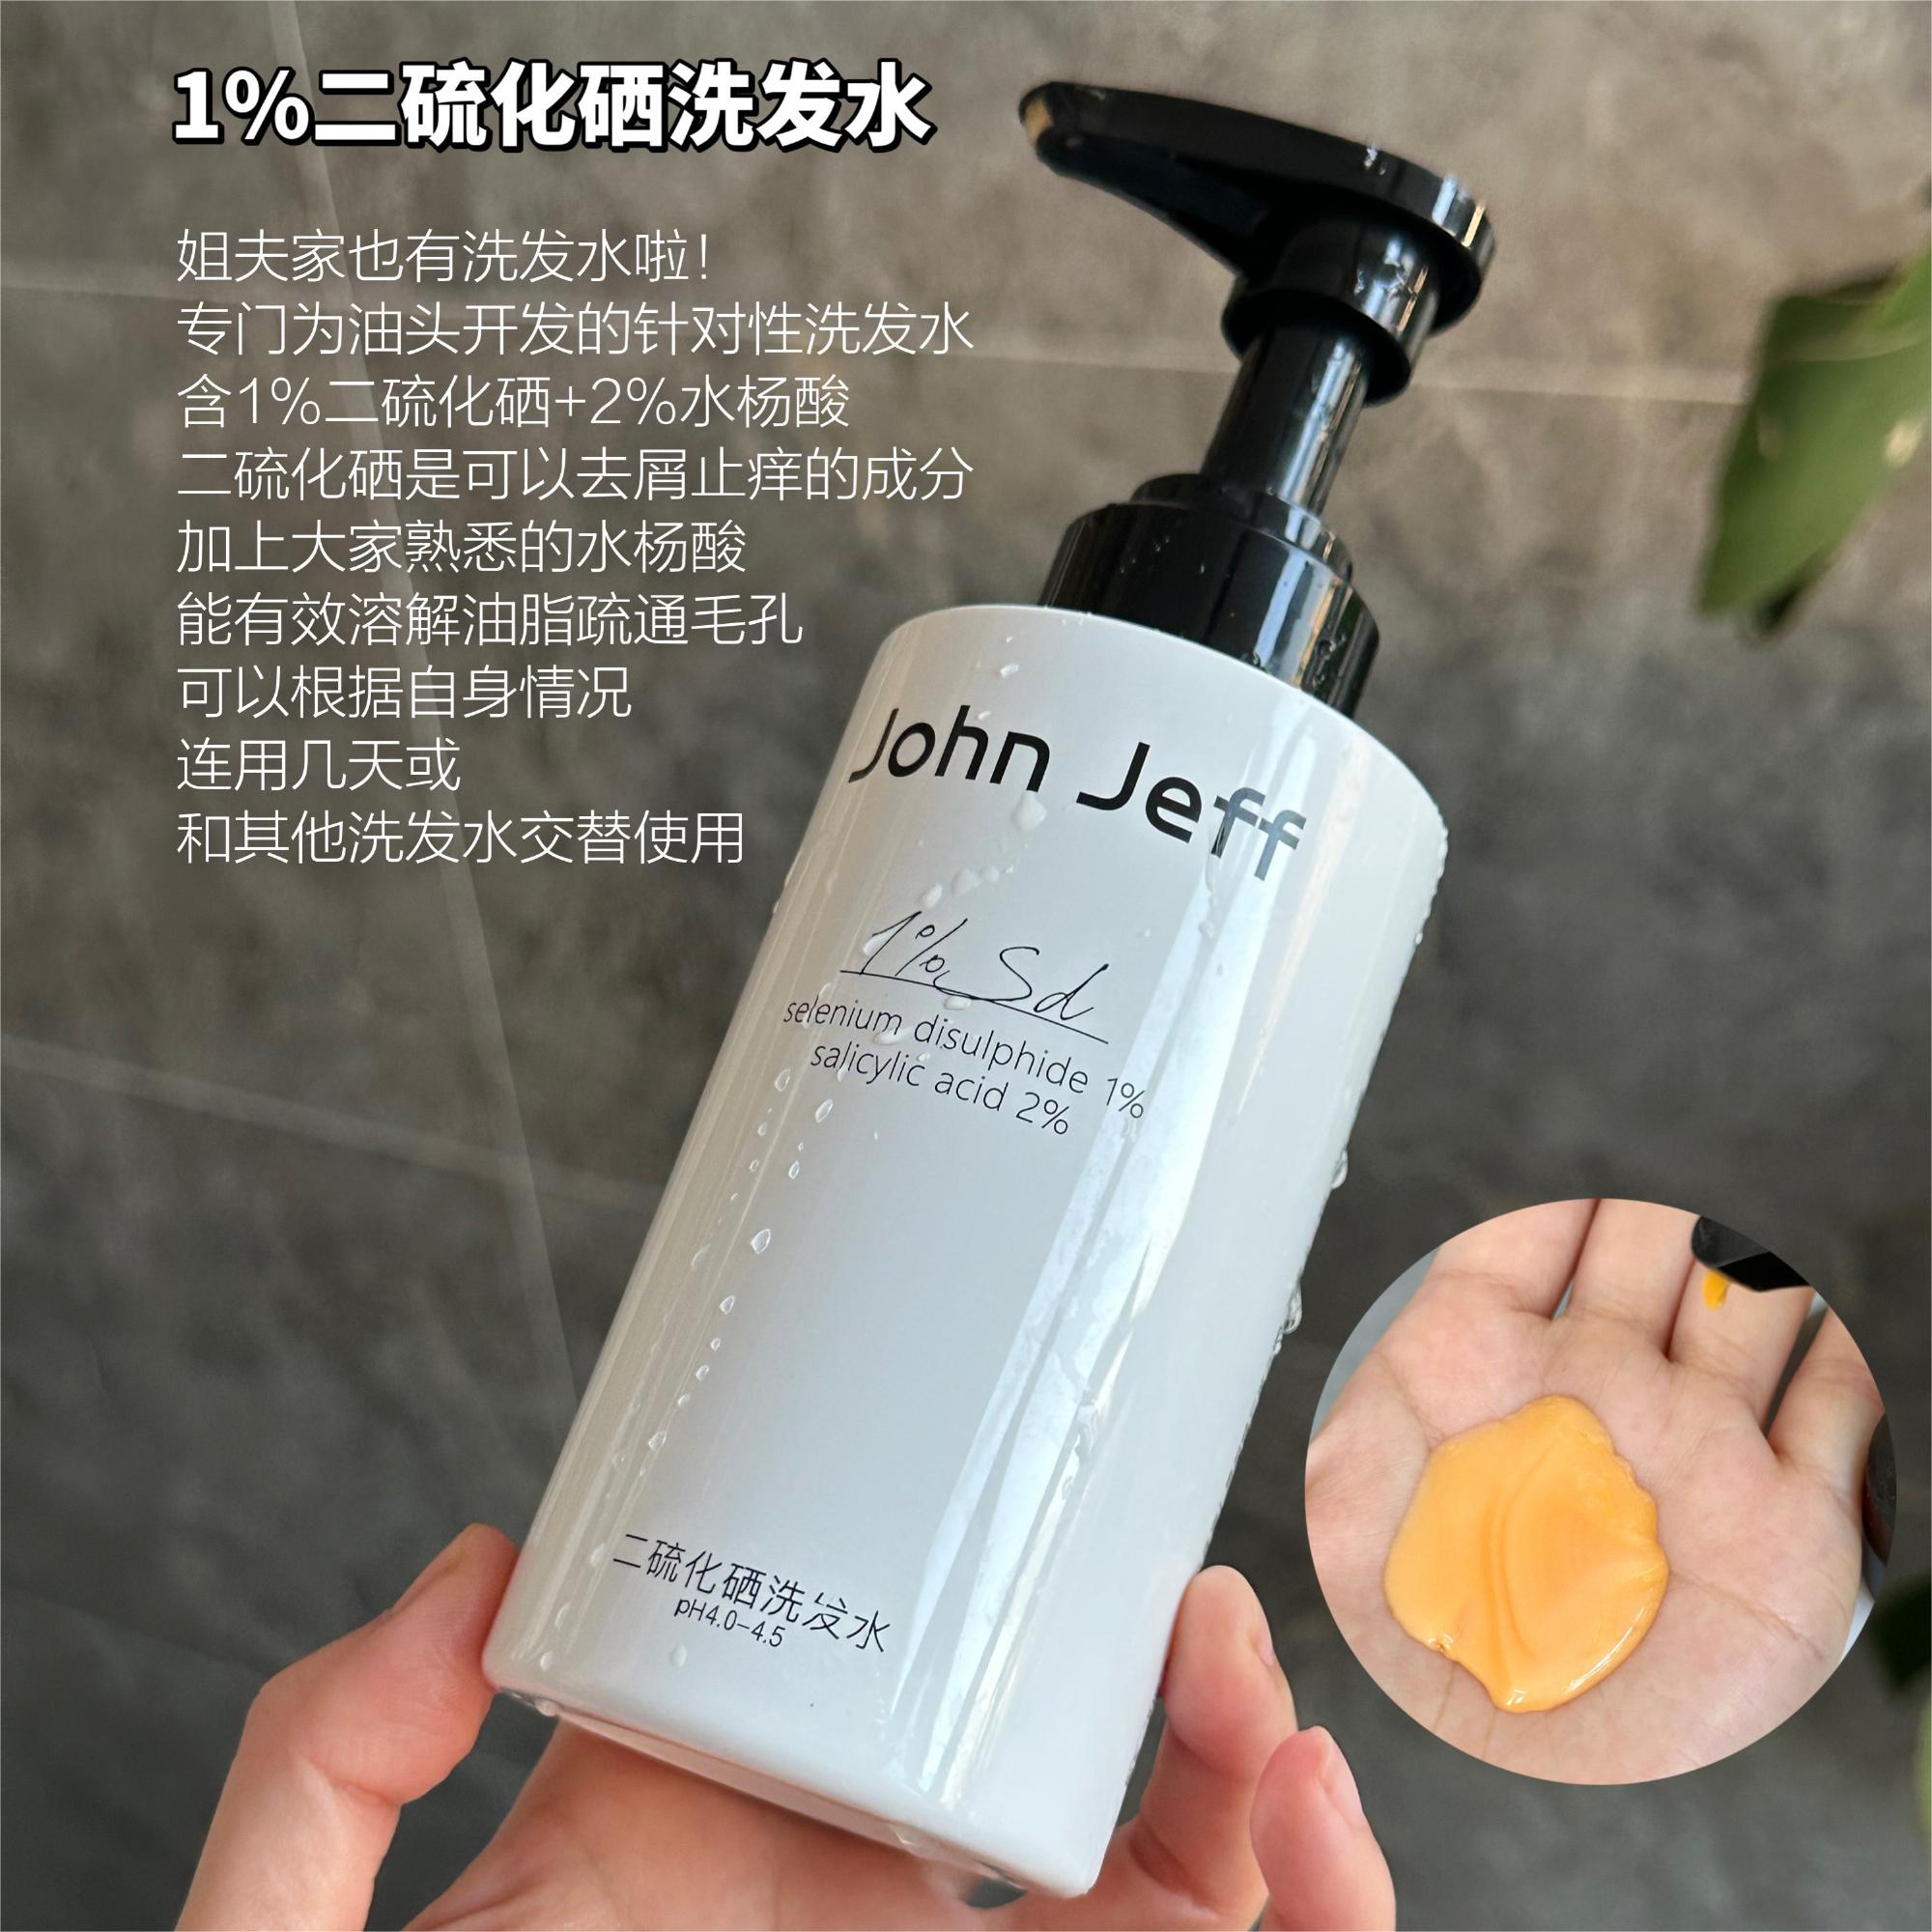 John Jeff 1% Selenium Disulphide Oil Control Shampoo 300ml John Jeff 1%二硫化硒控油洗发水